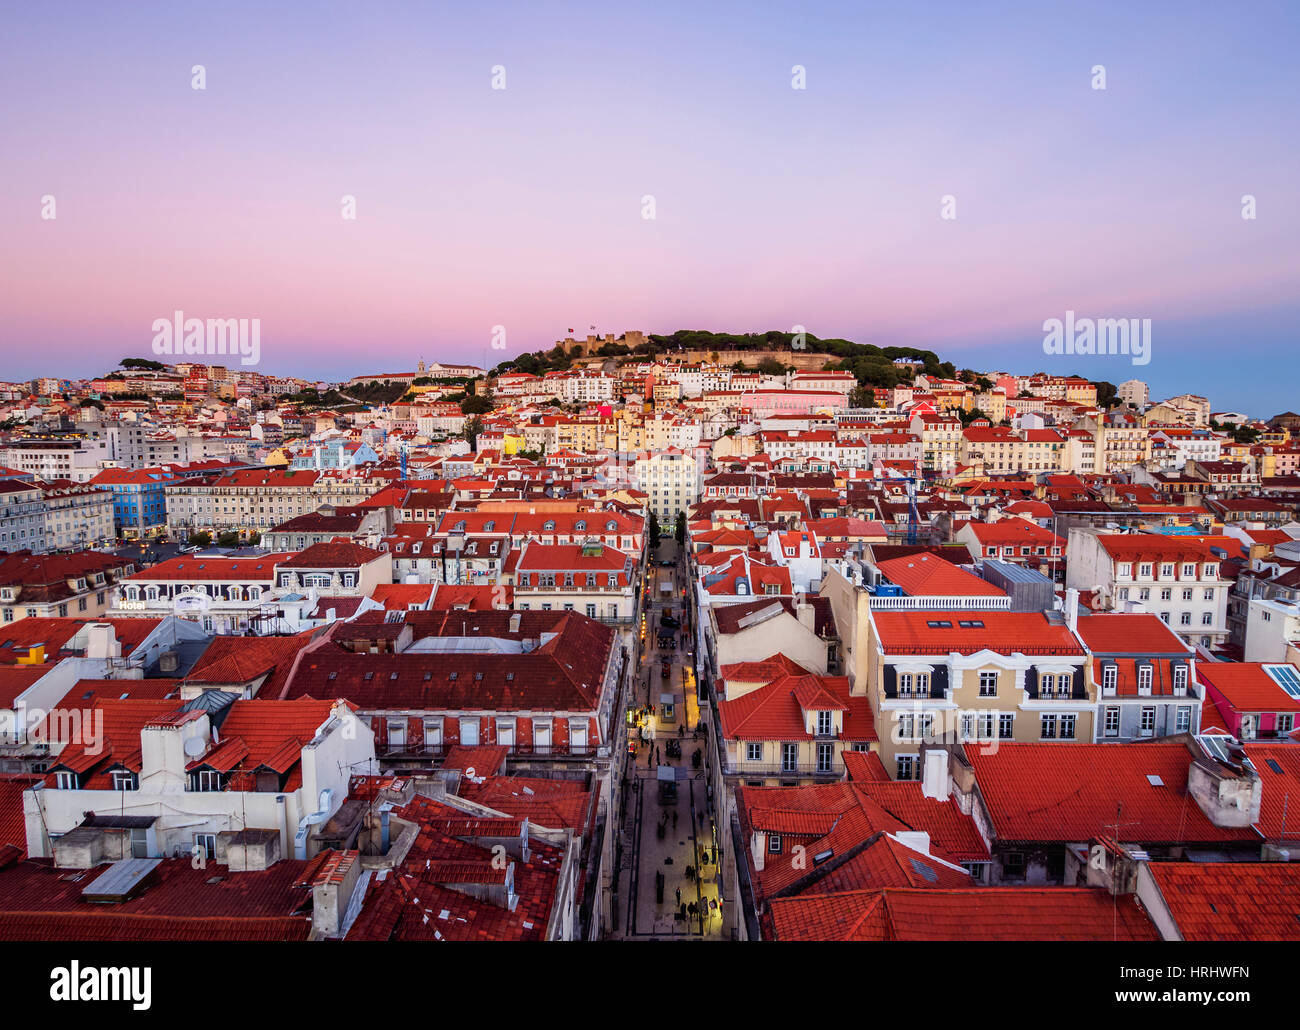 Miradouro de Santa Justa, view over downtown and Santa Justa Street towards the castle hill at sunset, Lisbon, Portugal Stock Photo